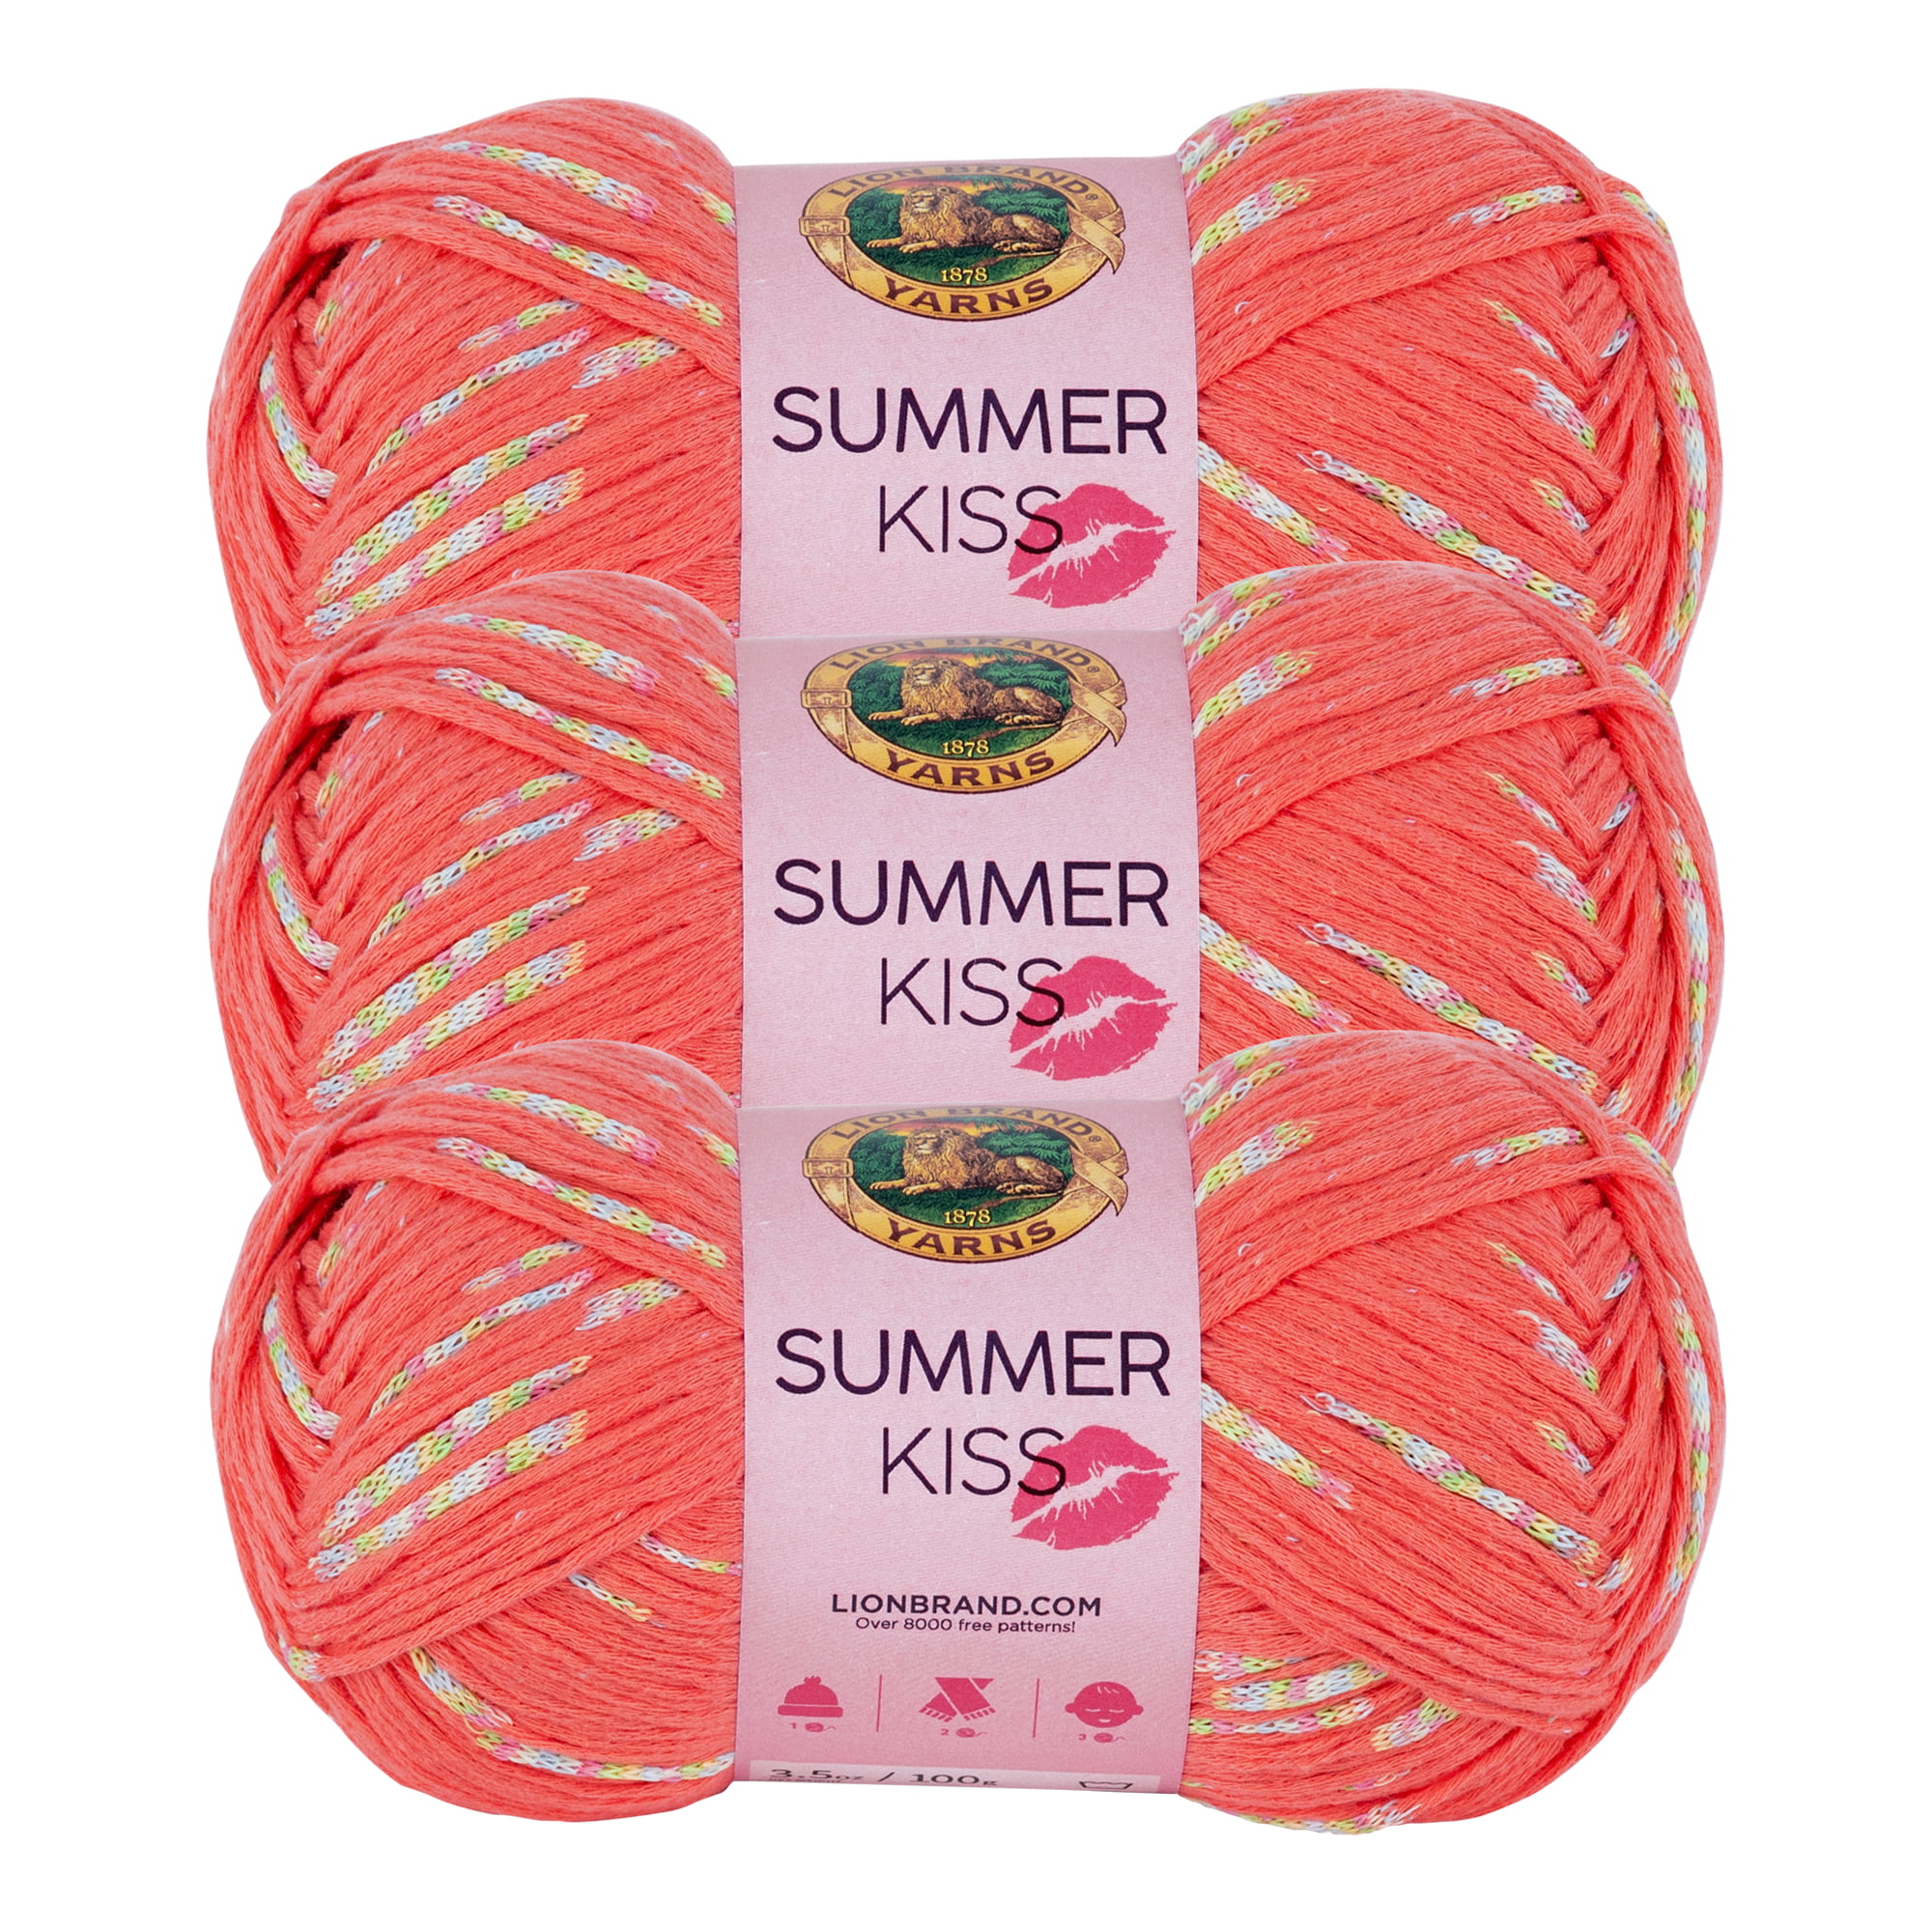 Lion Brand Yarn Summer Kiss Cherry I-Cord Medium Cotton, Polyester  Multi-color Yarn 3 Pack 